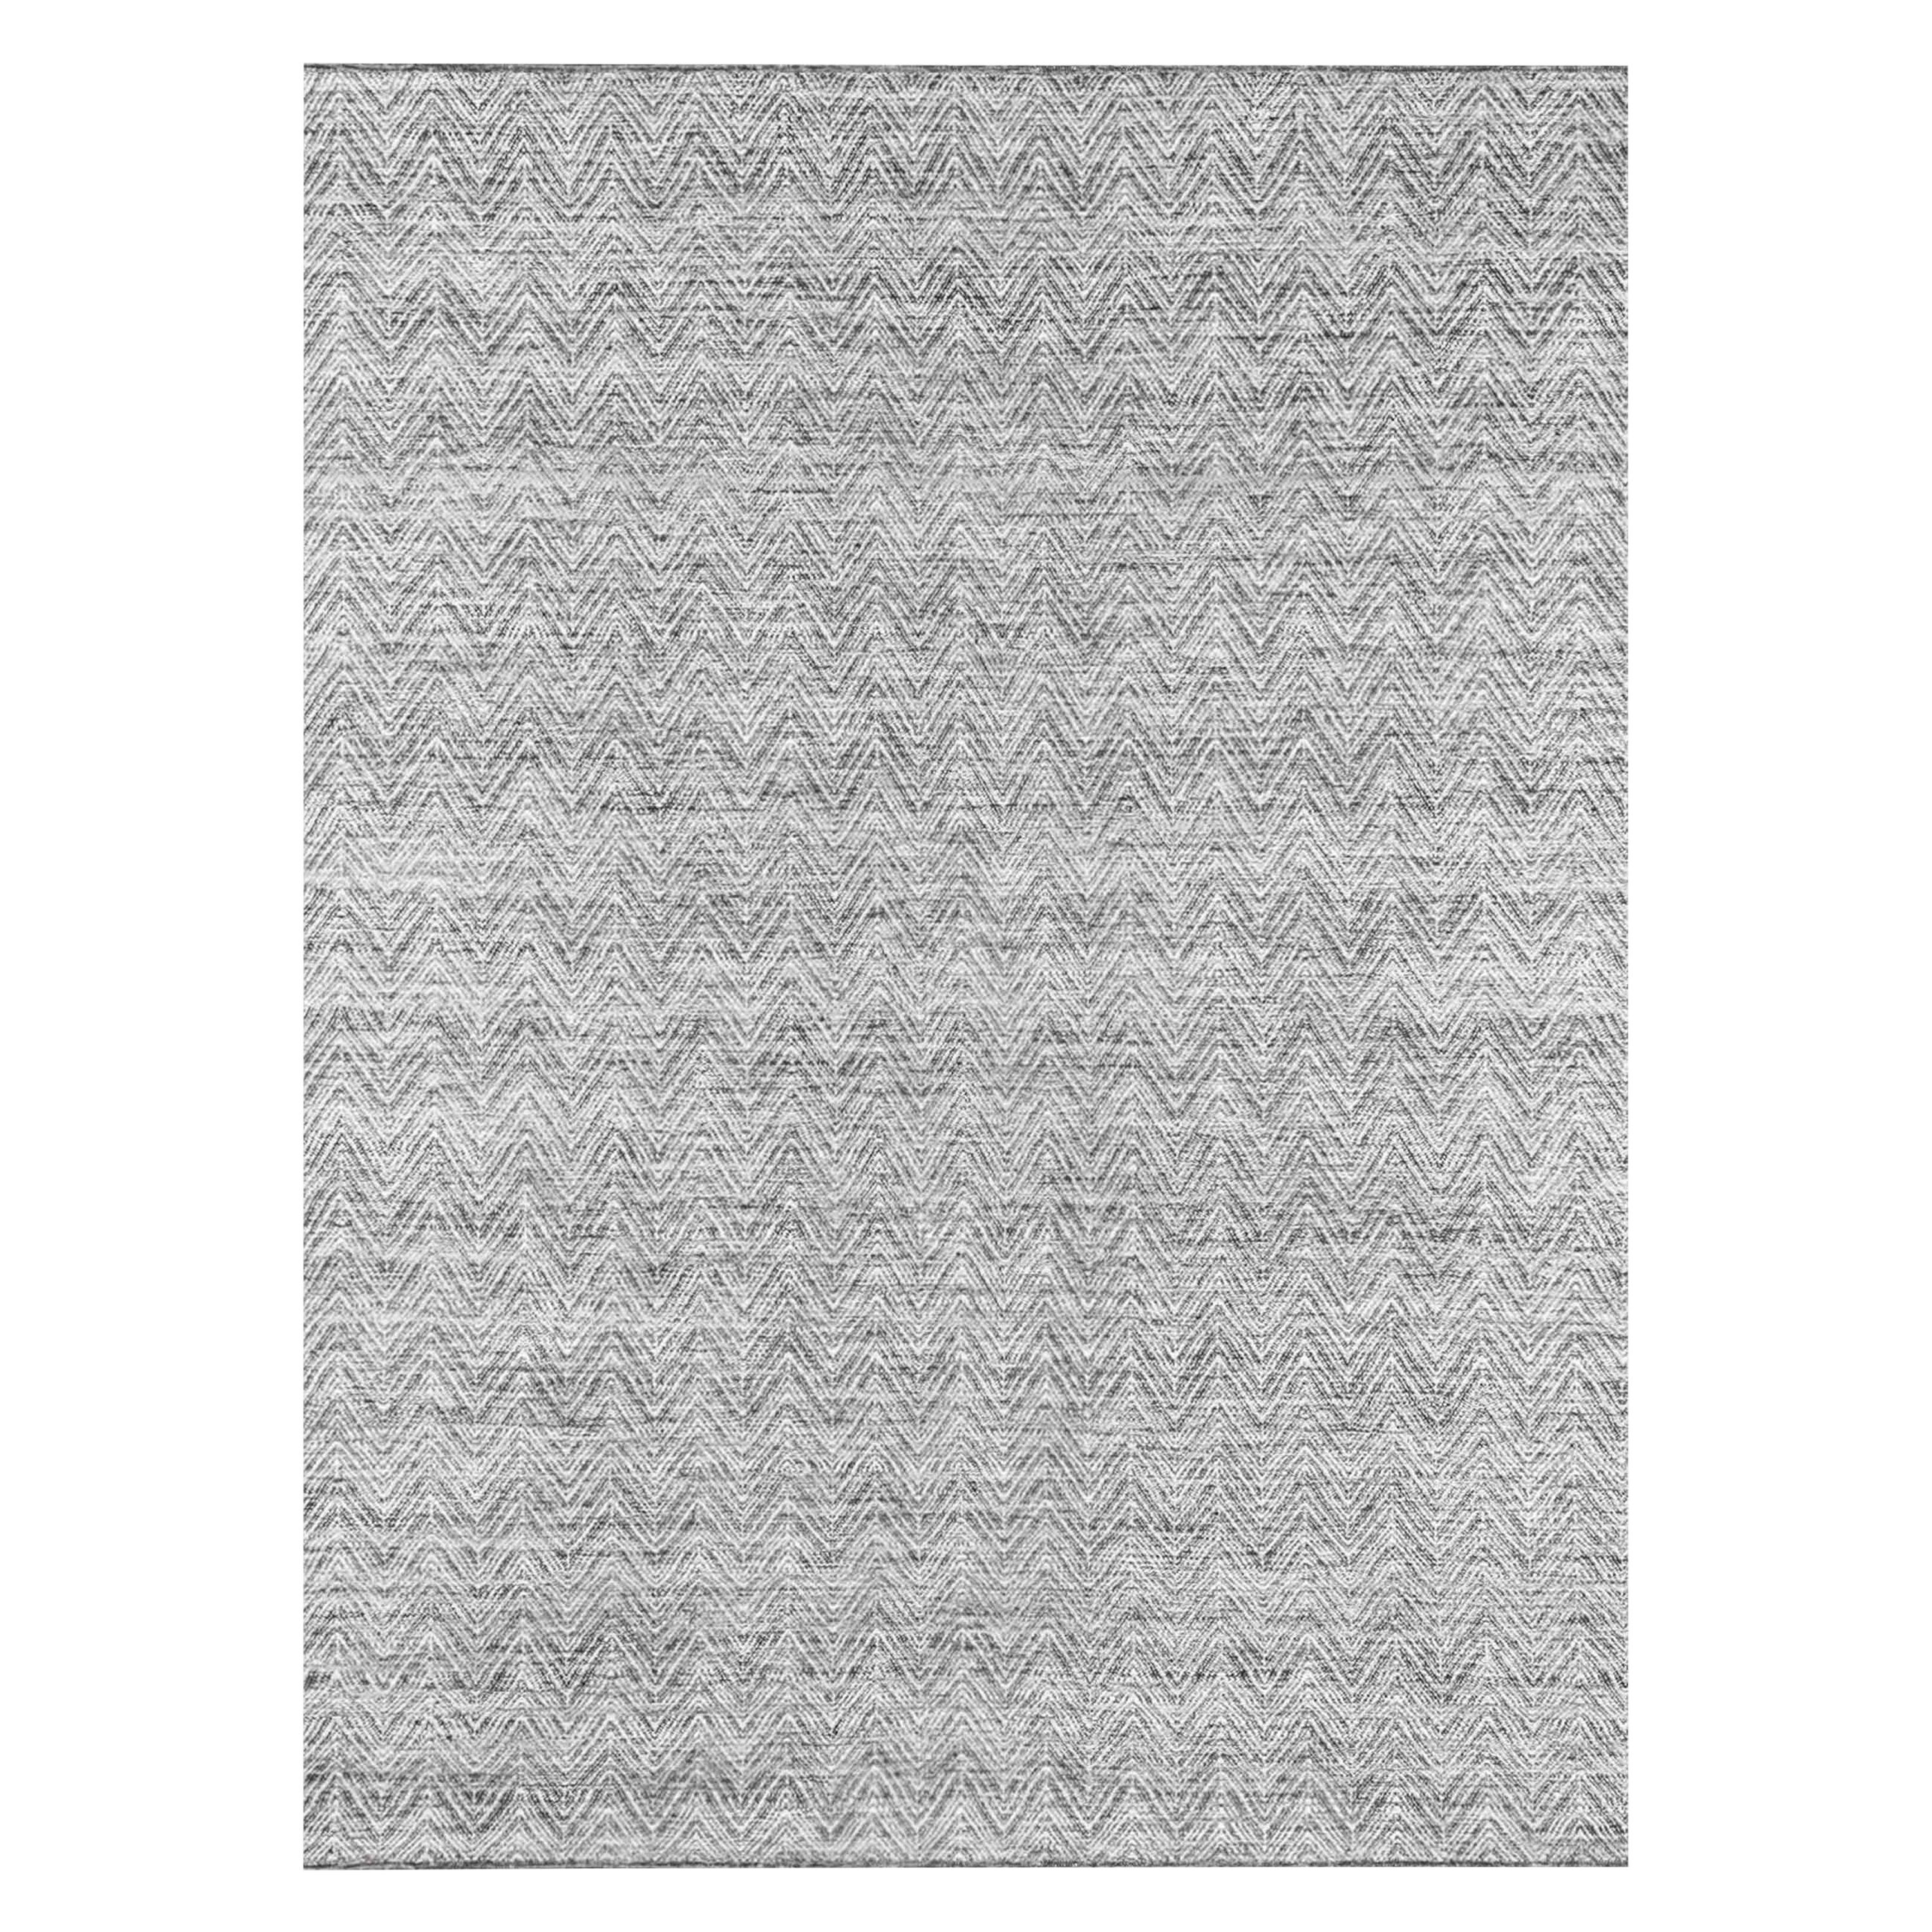 For Sale: Black (Charcoal) Ben Soleimani Ceyah Rug– Hand-woven Plush Textured Wool + Linen Charcoal 10'x14'